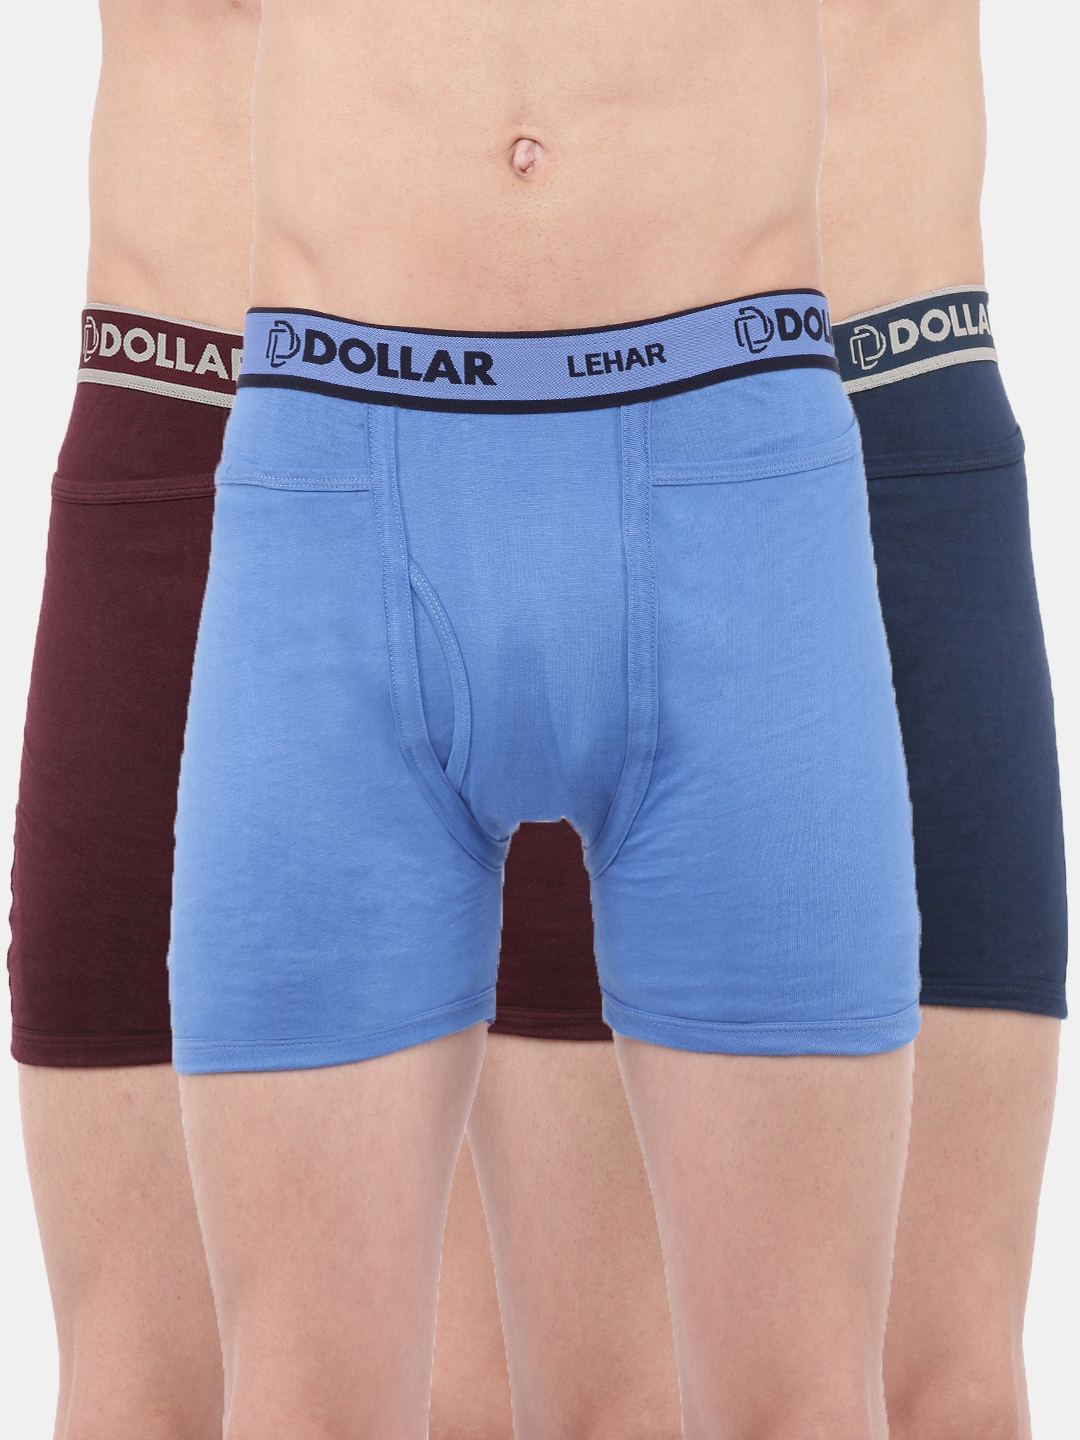 Dollar Lehar Men's Underwear Long Trunk (T/E) - Pack of 4 - BAGDA